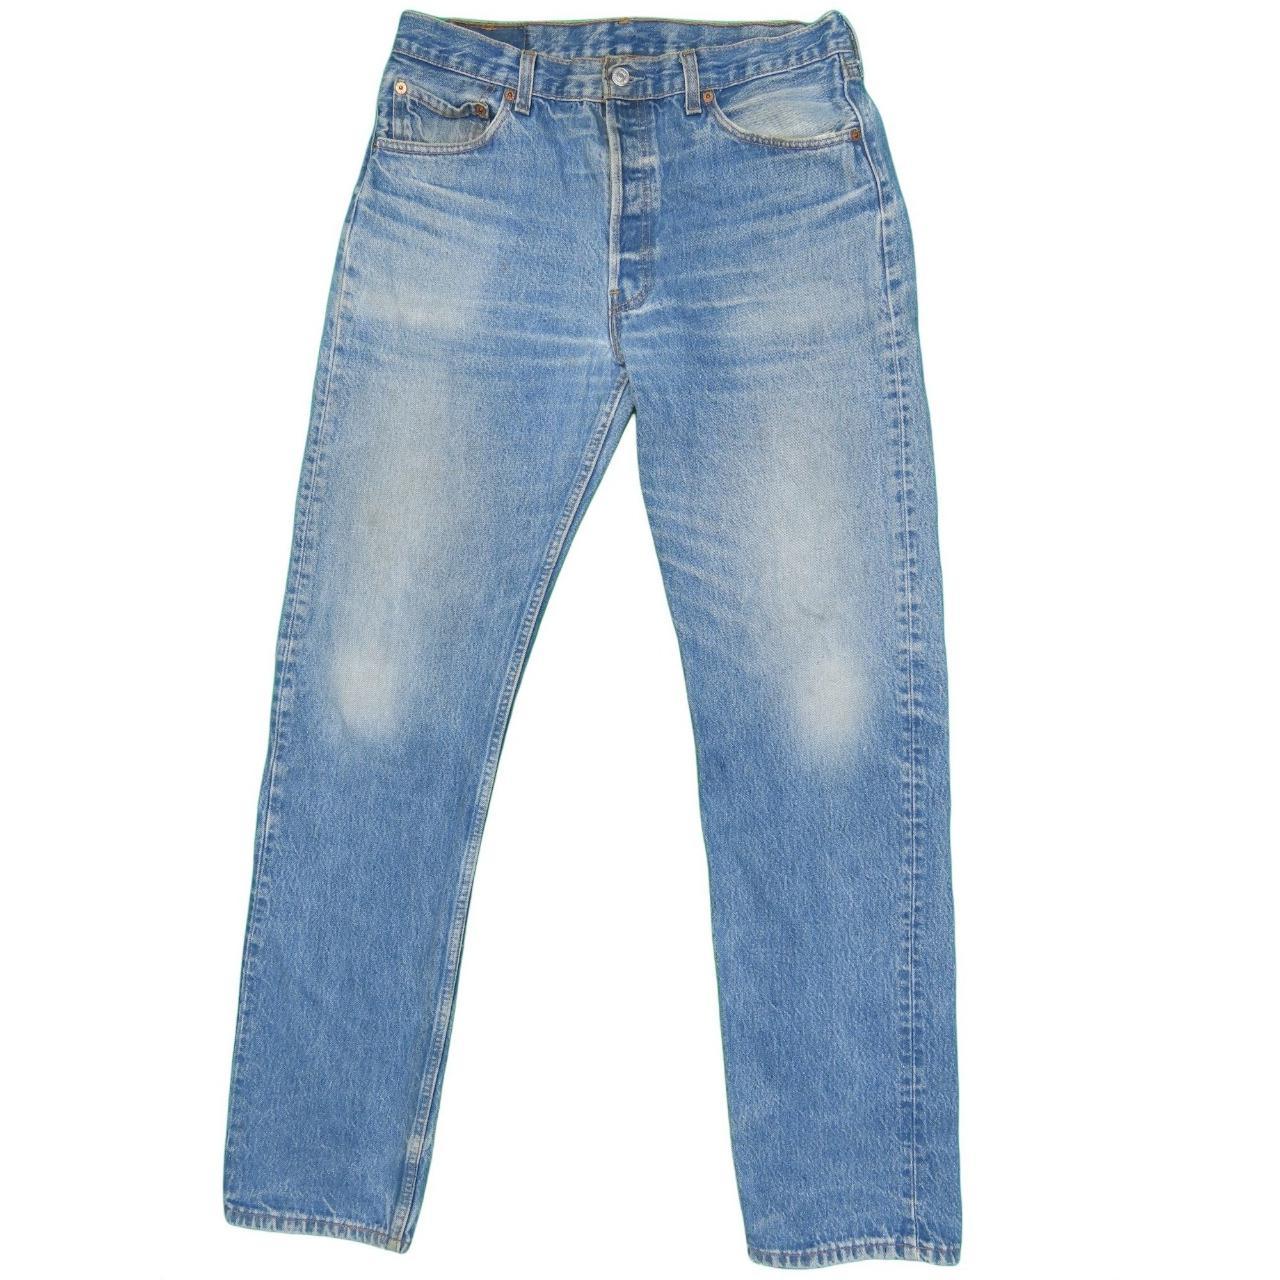 Vintage Levis 501 Jeans 32x34 100% cotton made in... - Depop